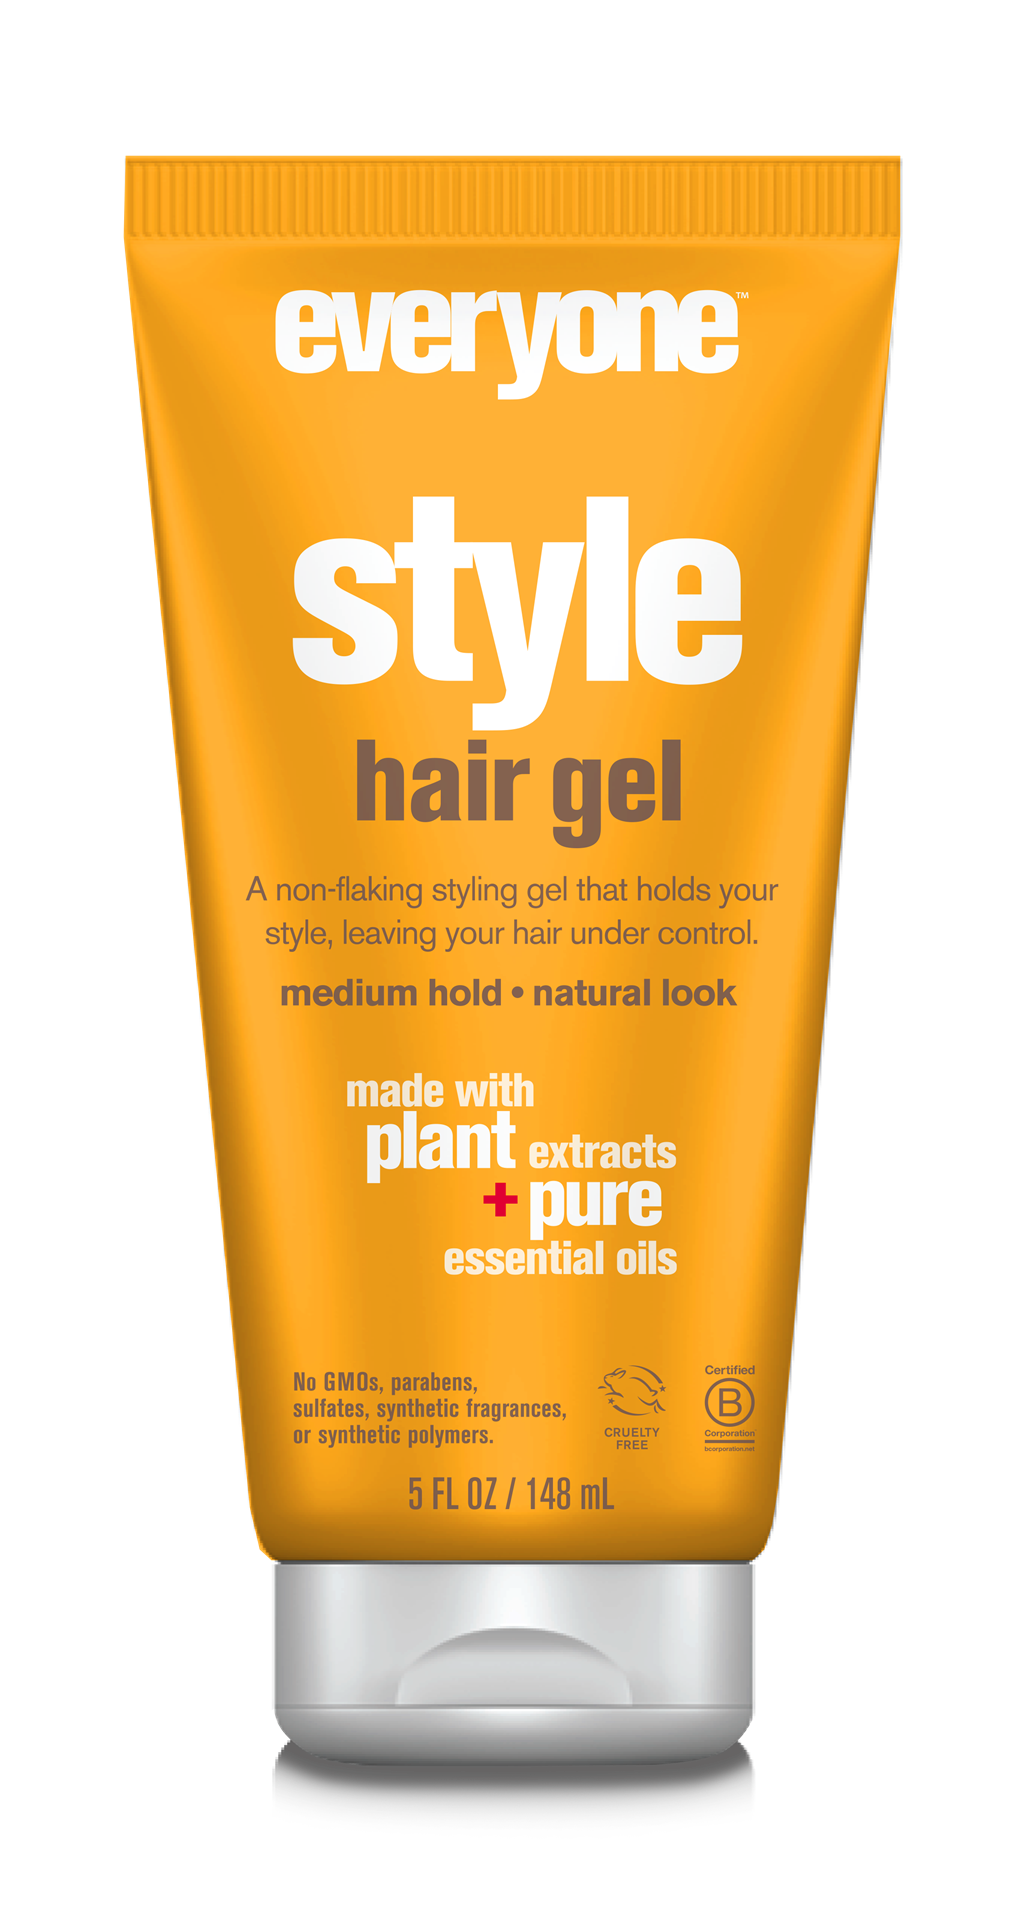 Everyone Style Hair Gel, 148ml   - Canada's online vitamin,  beauty & health store.